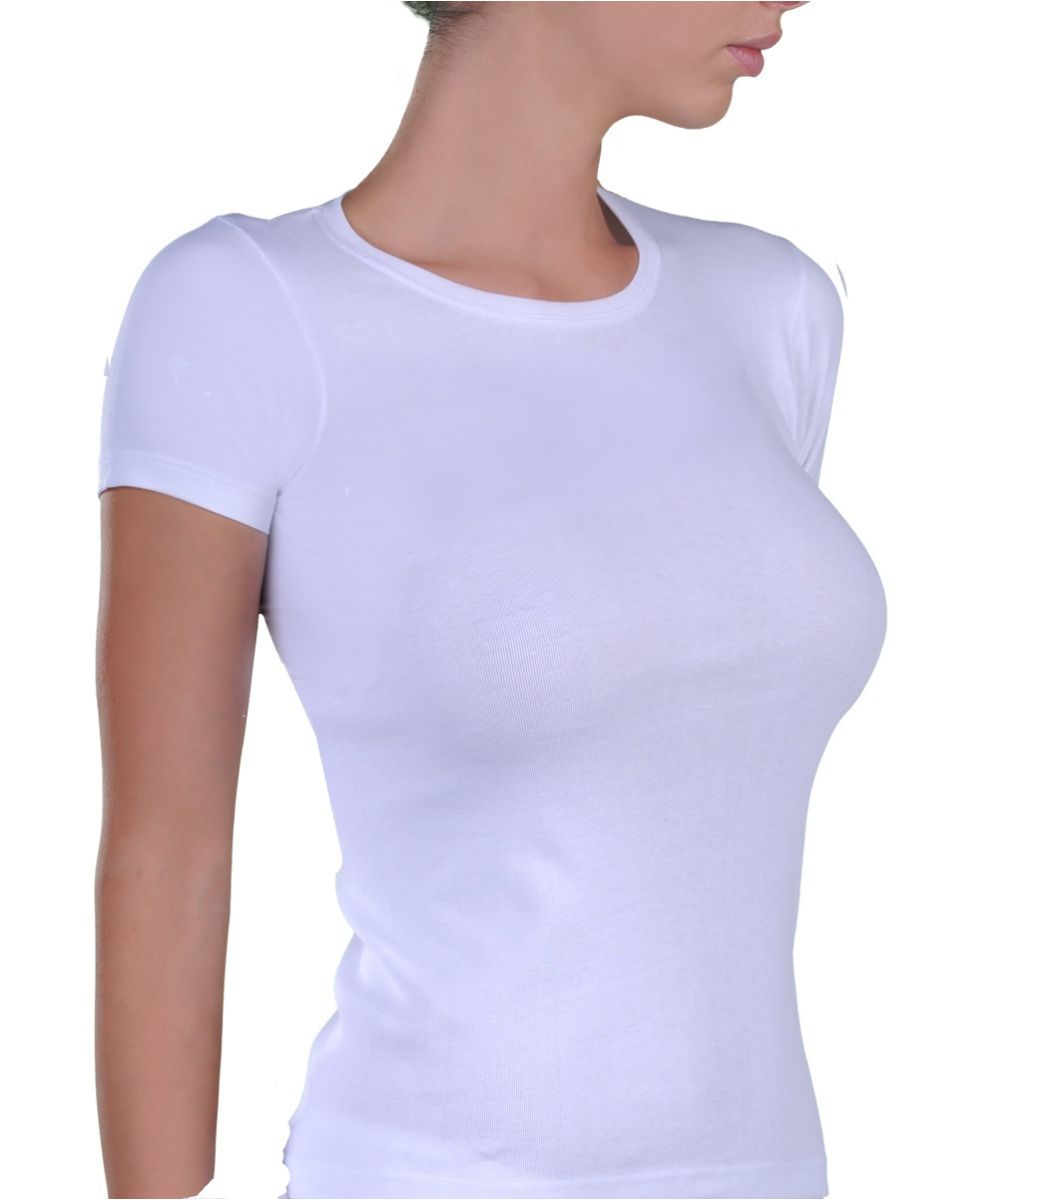 Women elastic T-Shirt, white